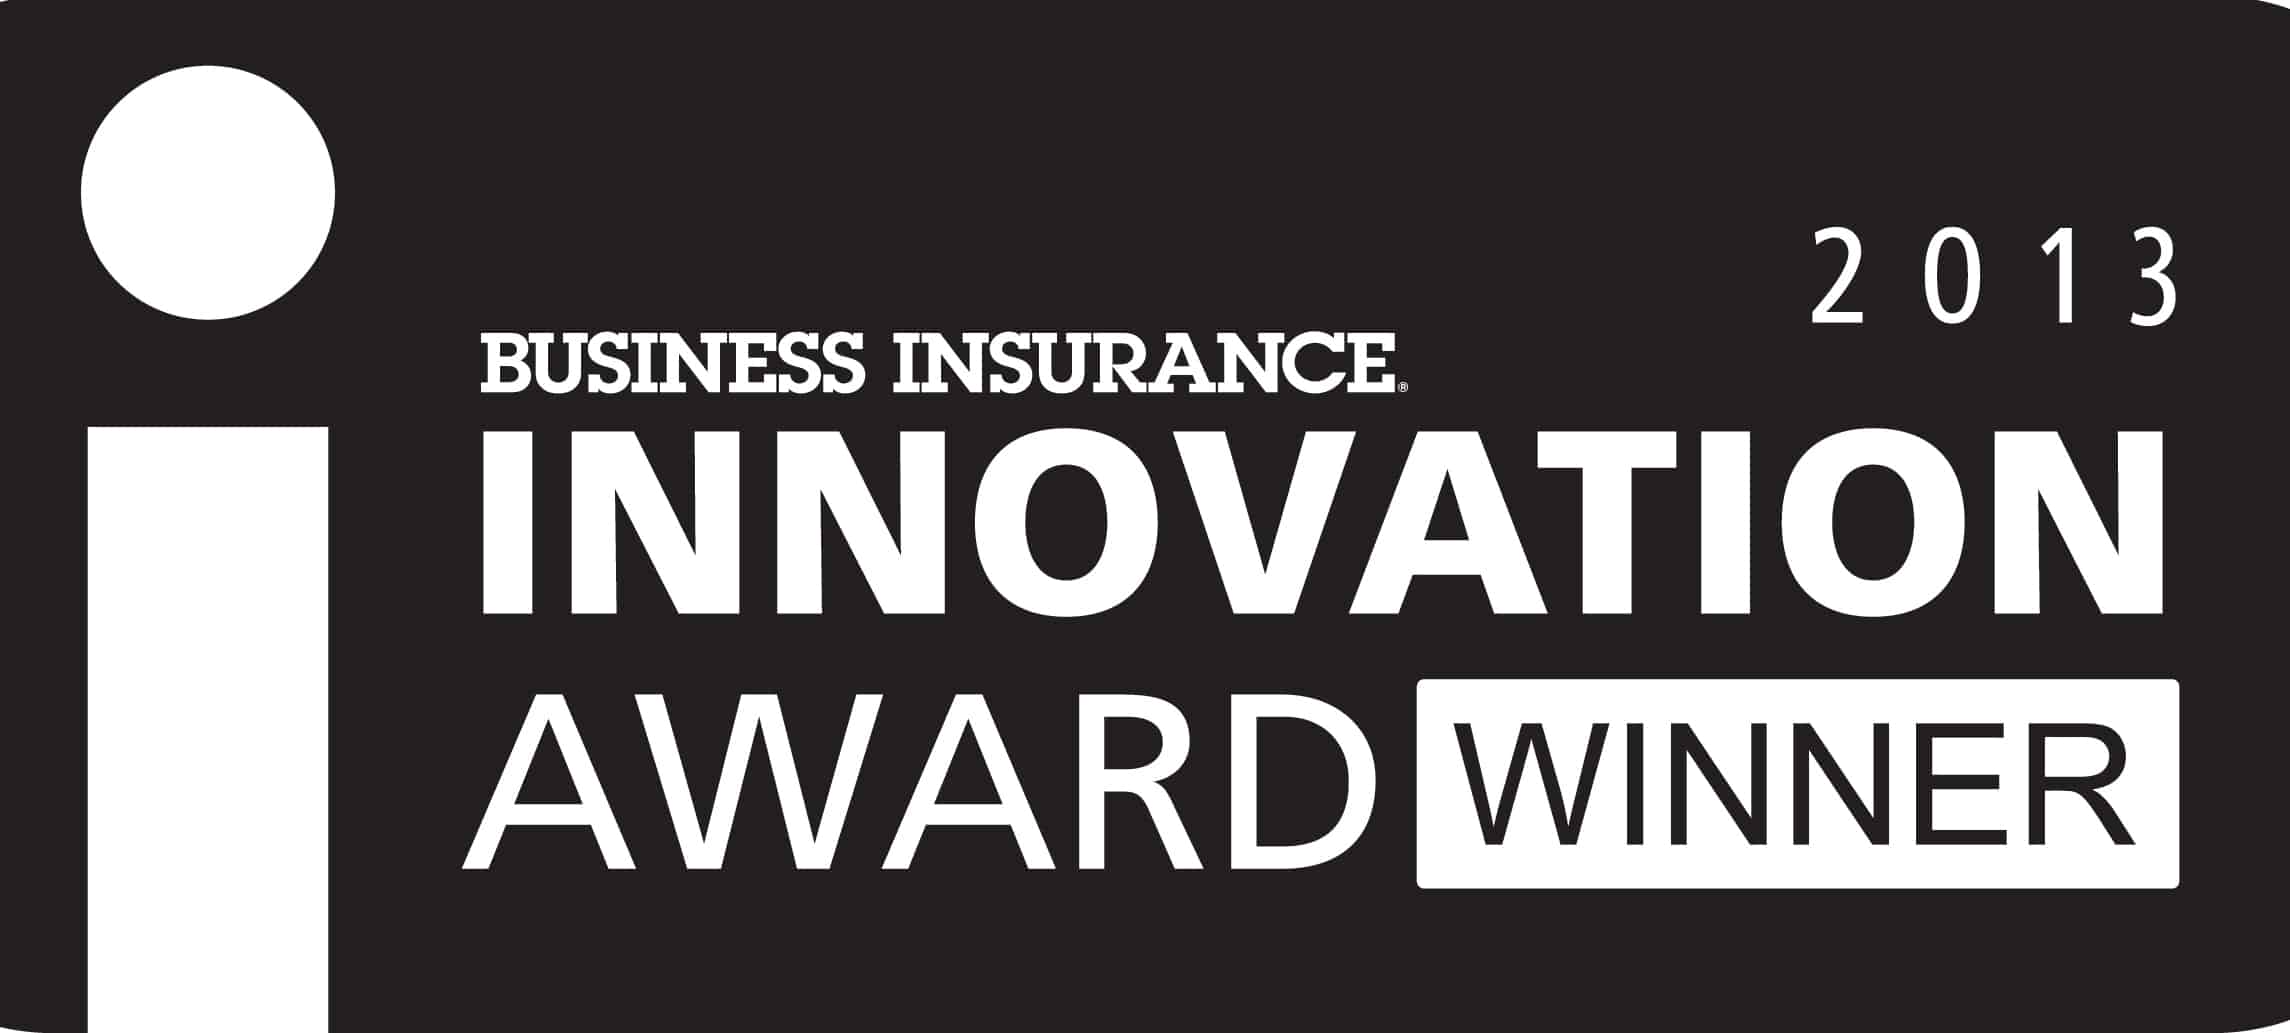 SafeSchools’ Partner, Keenan & Associates, Receives 2013 Business Insurance Innovation Award